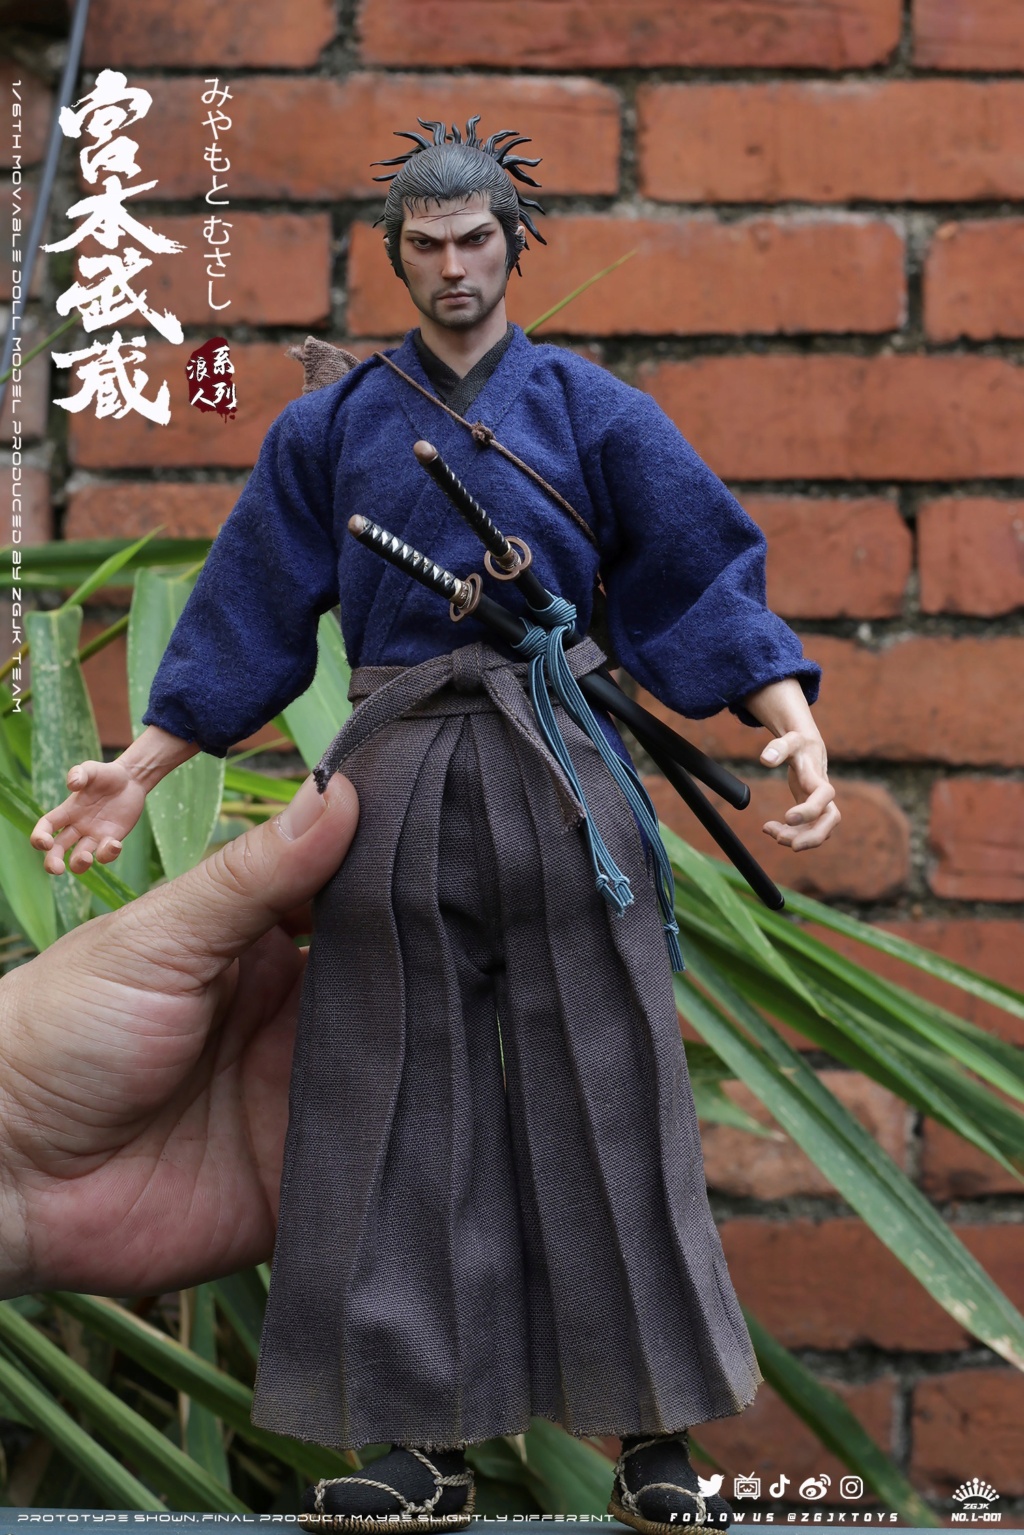 ZGJKToys - MEW PRODUCT: ZGJKTOYS: Ronin Series 1/6 Miyamoto Musashi Action Figure ------ Updated Official Figure 8678eb10